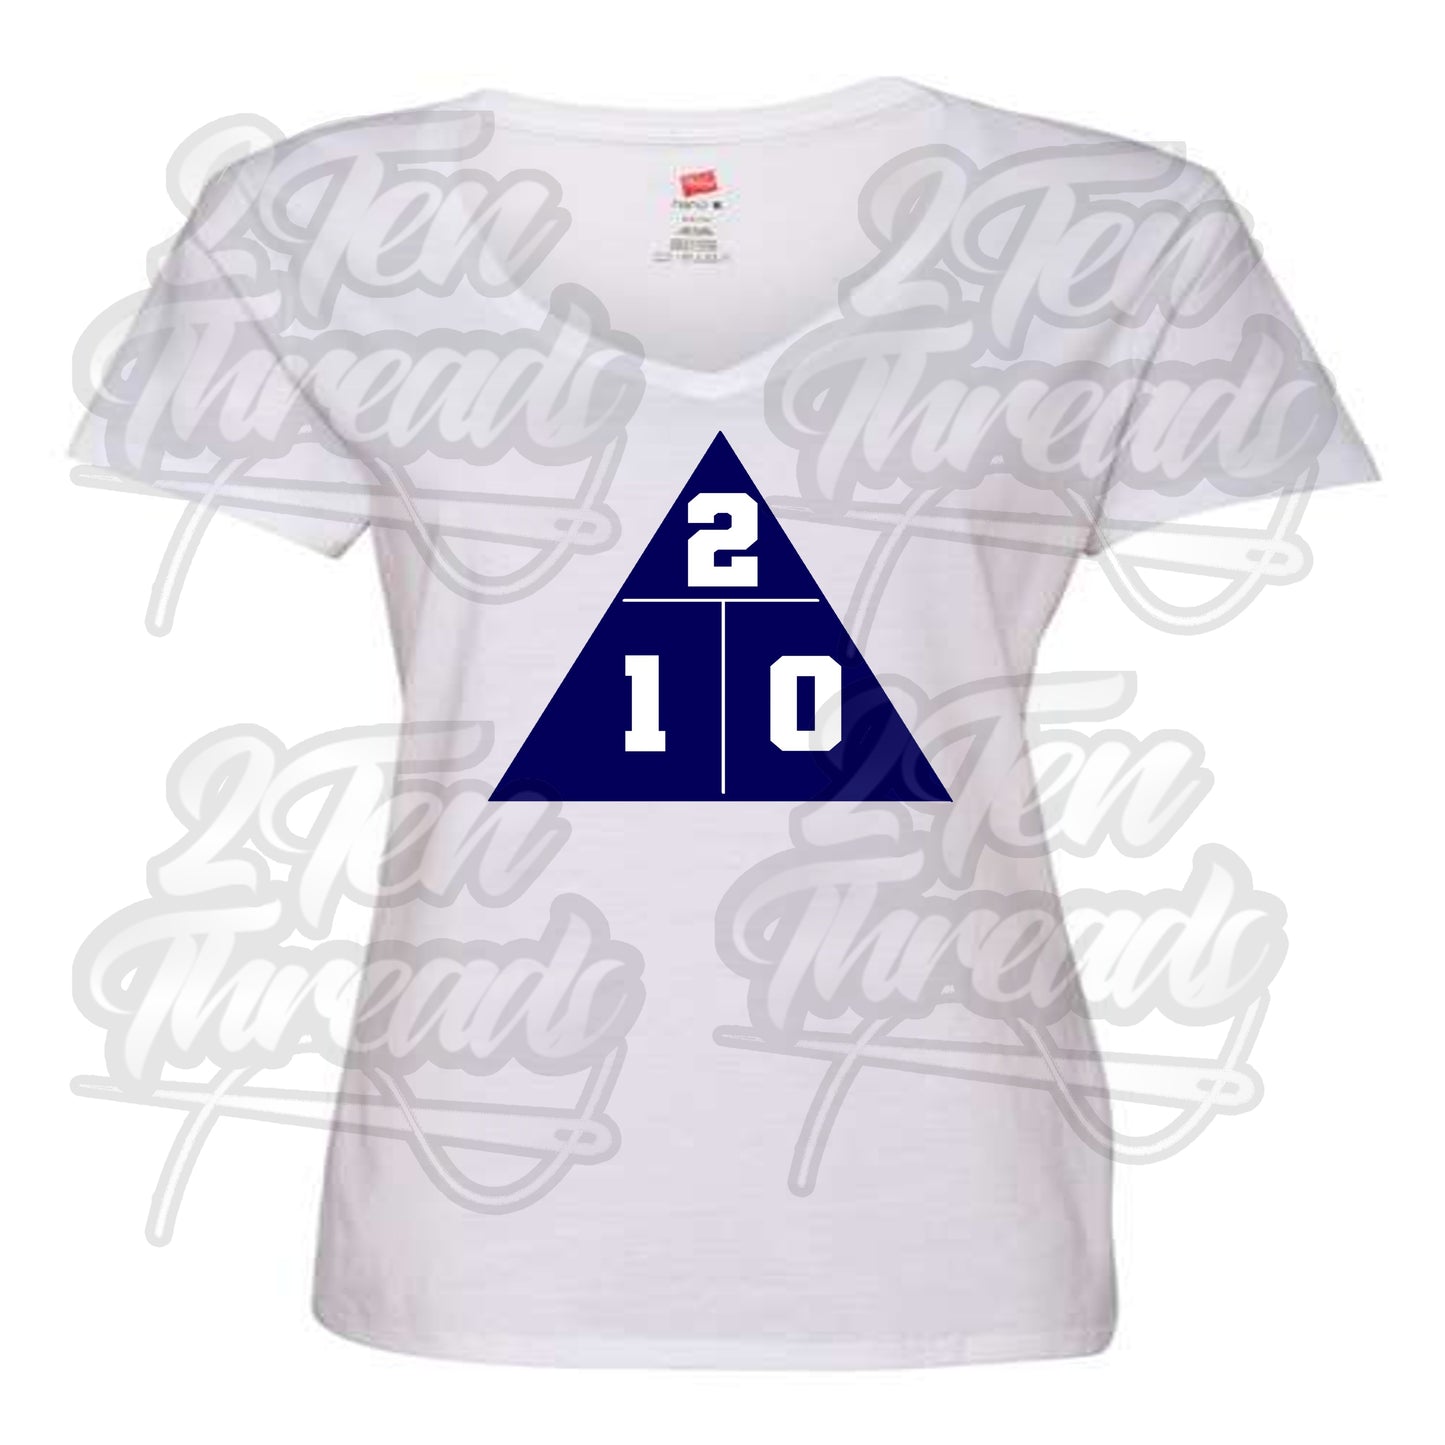 210 Triangle Shirt UTSA!